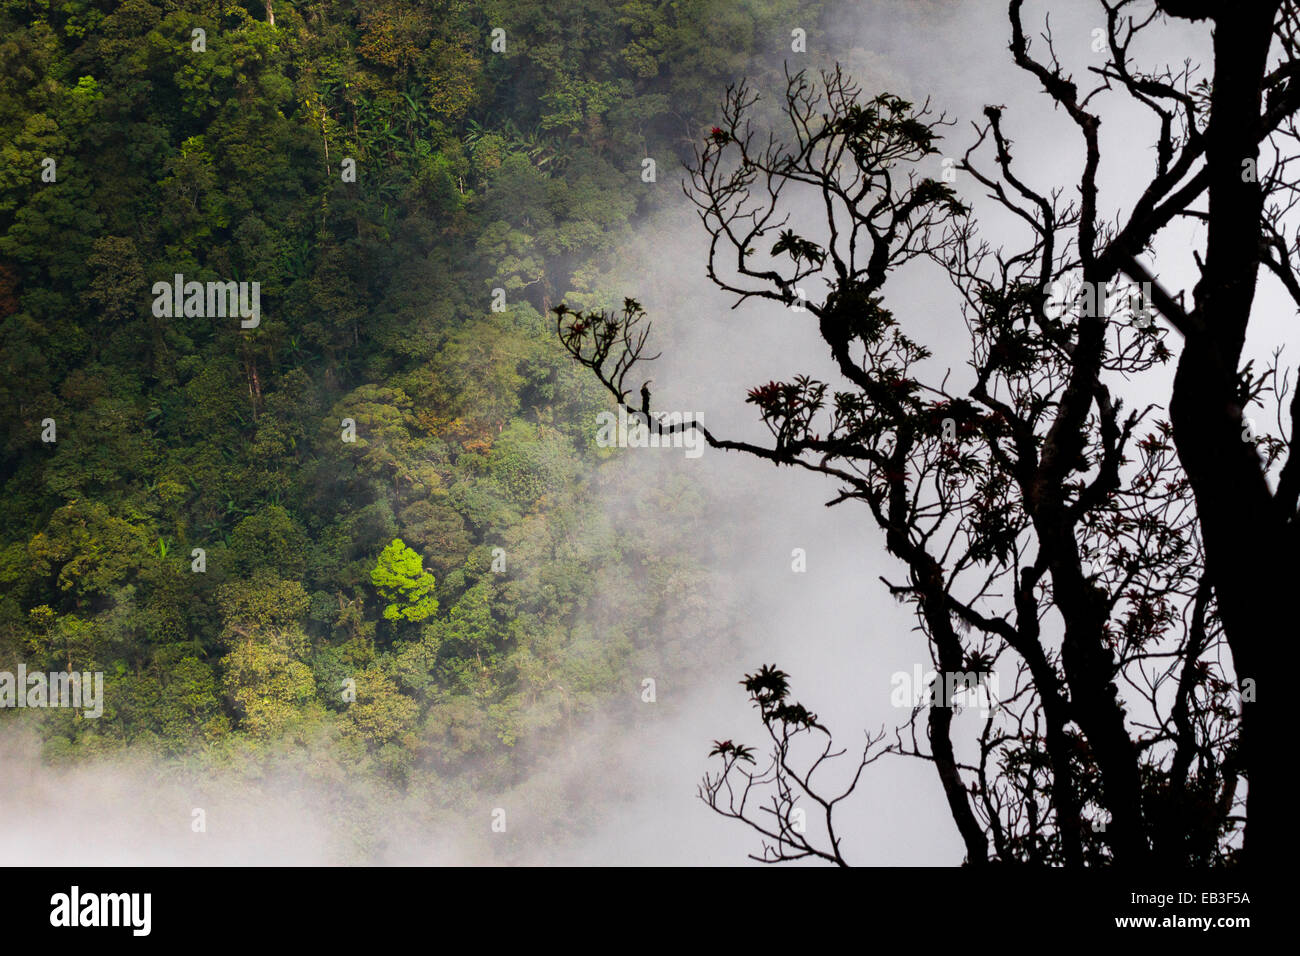 Tropical rainforest in Gunung Halimun Salak National Park, Indonesia. Stock Photo